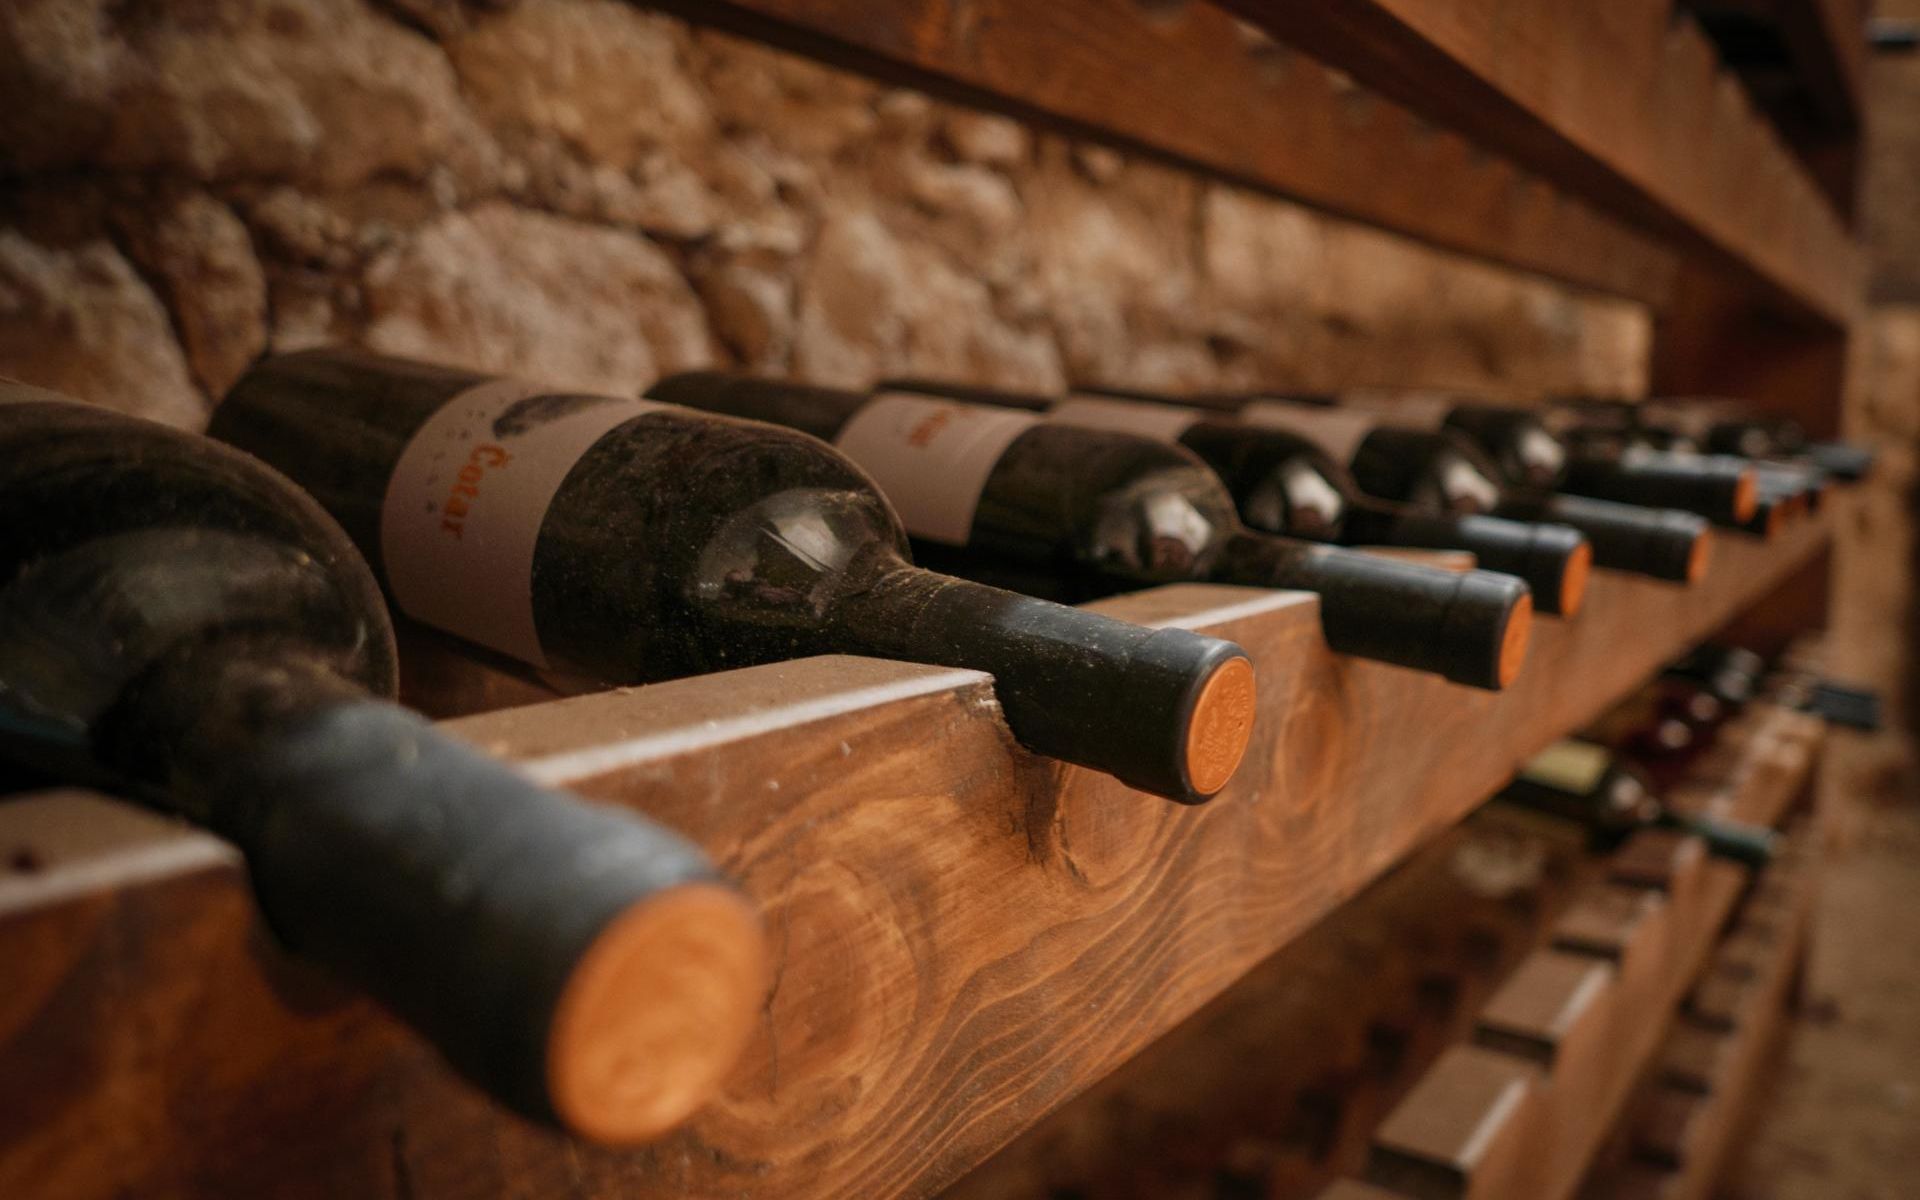 close-up-image-of-wine-bottles-on-shelves-in-cella-B73A2MJ.jpg